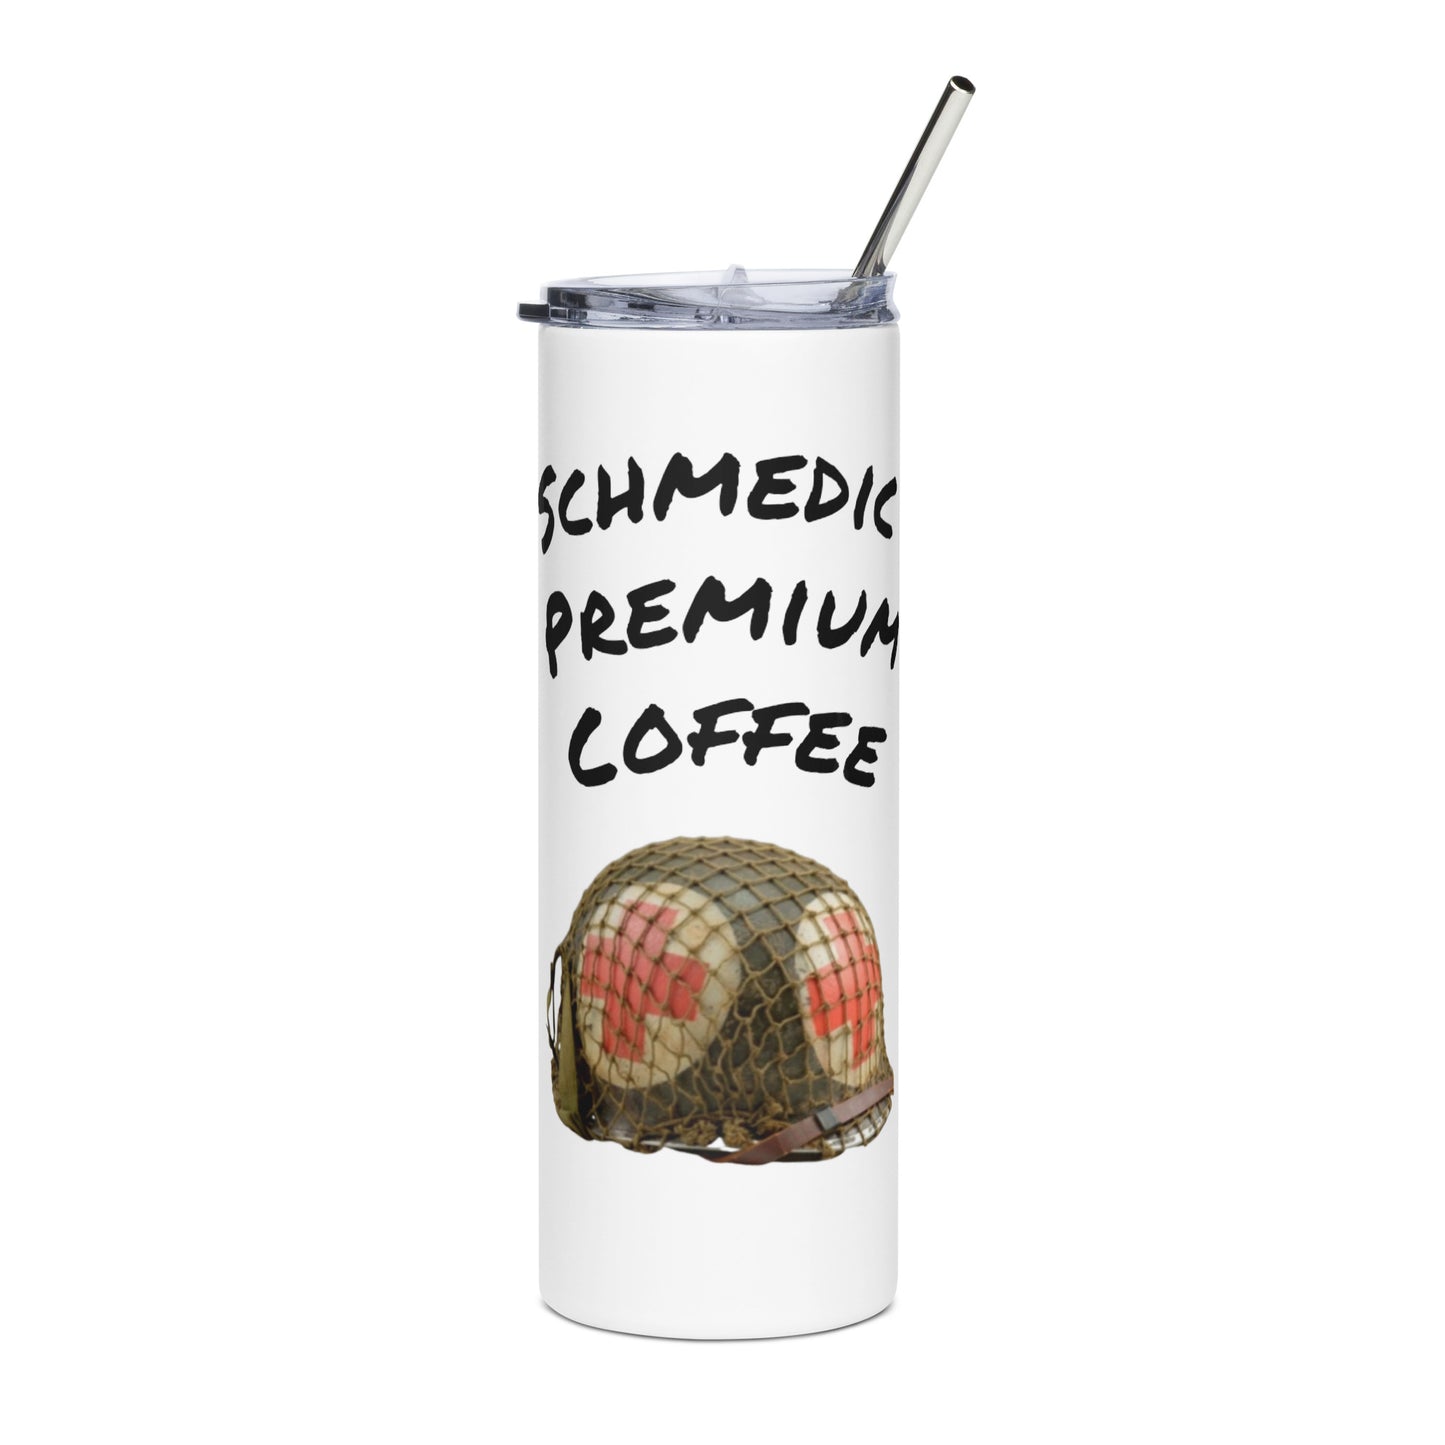 Schmedic Premium Coffee tumbler